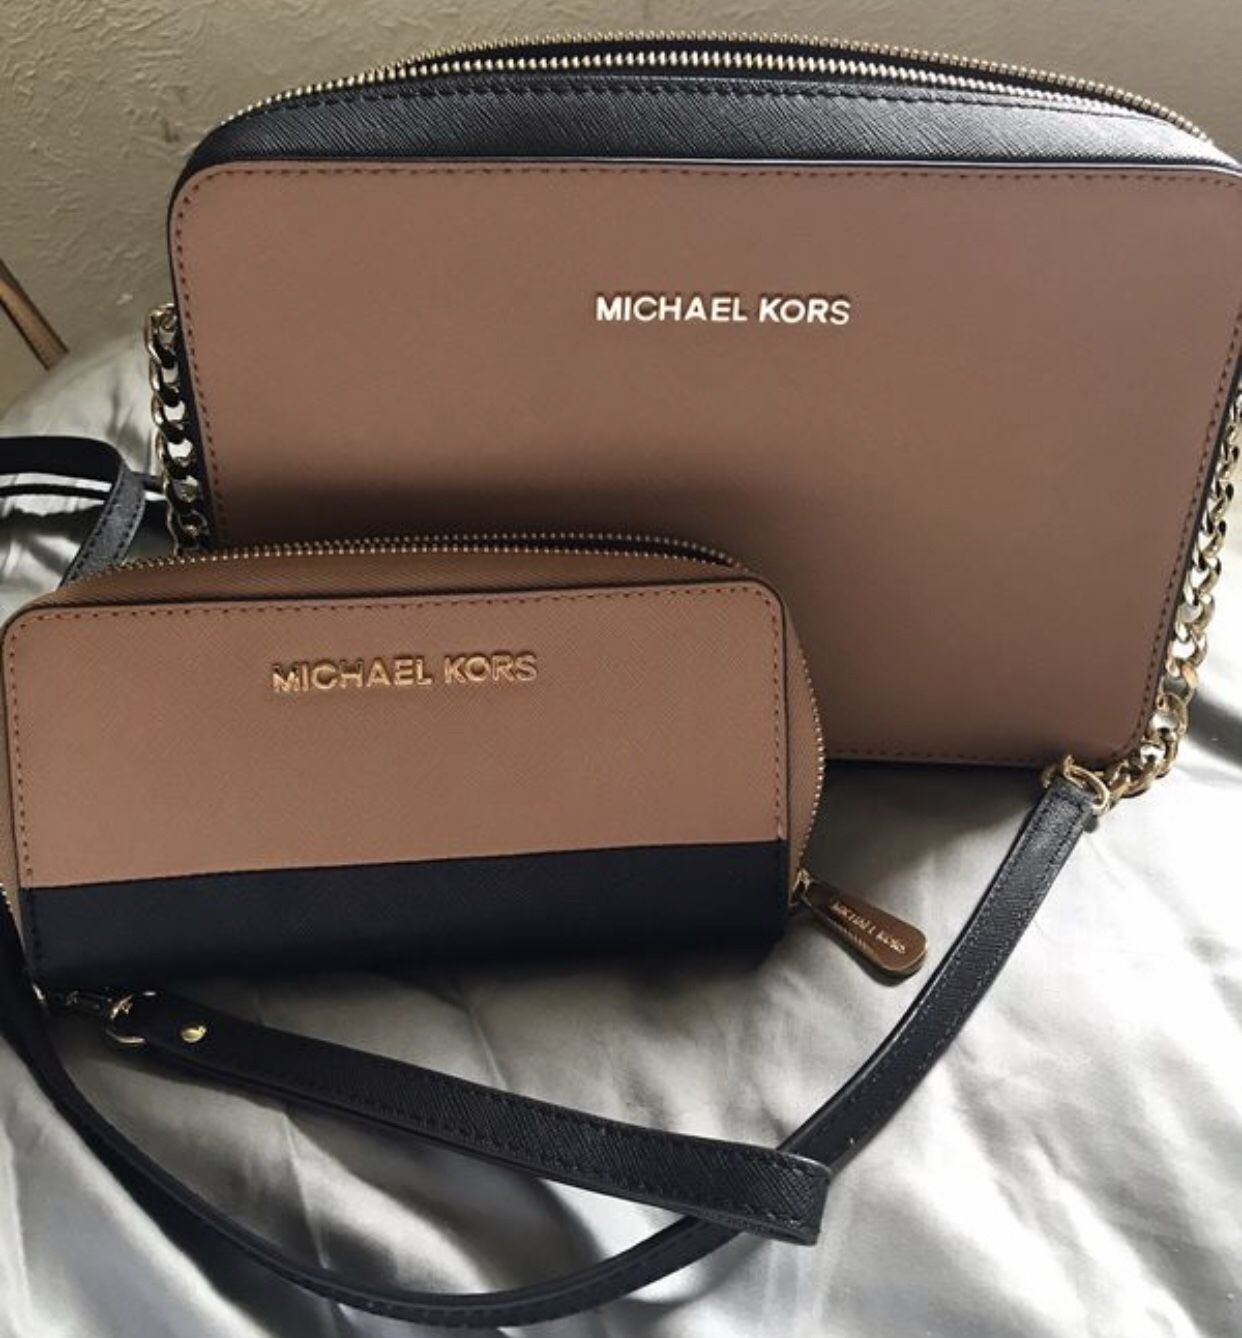 Michael Kors crossbody bag and wallet